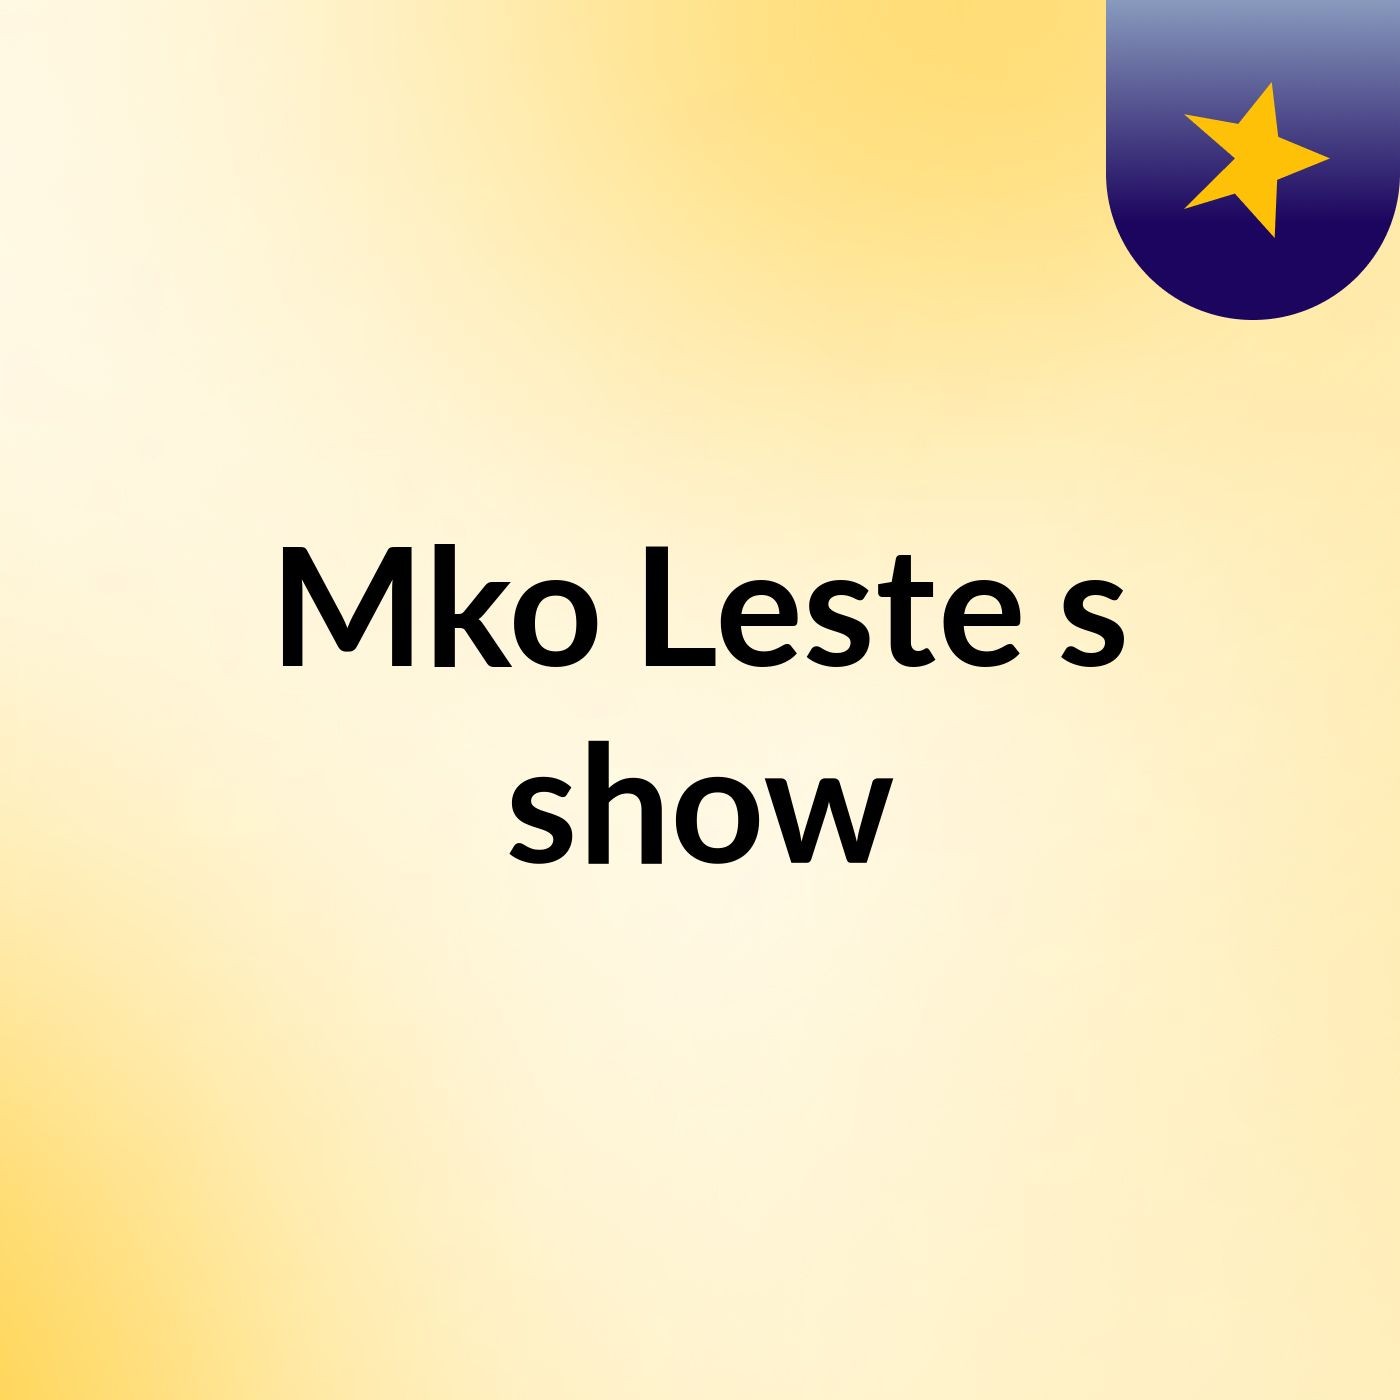 Mko Leste's show